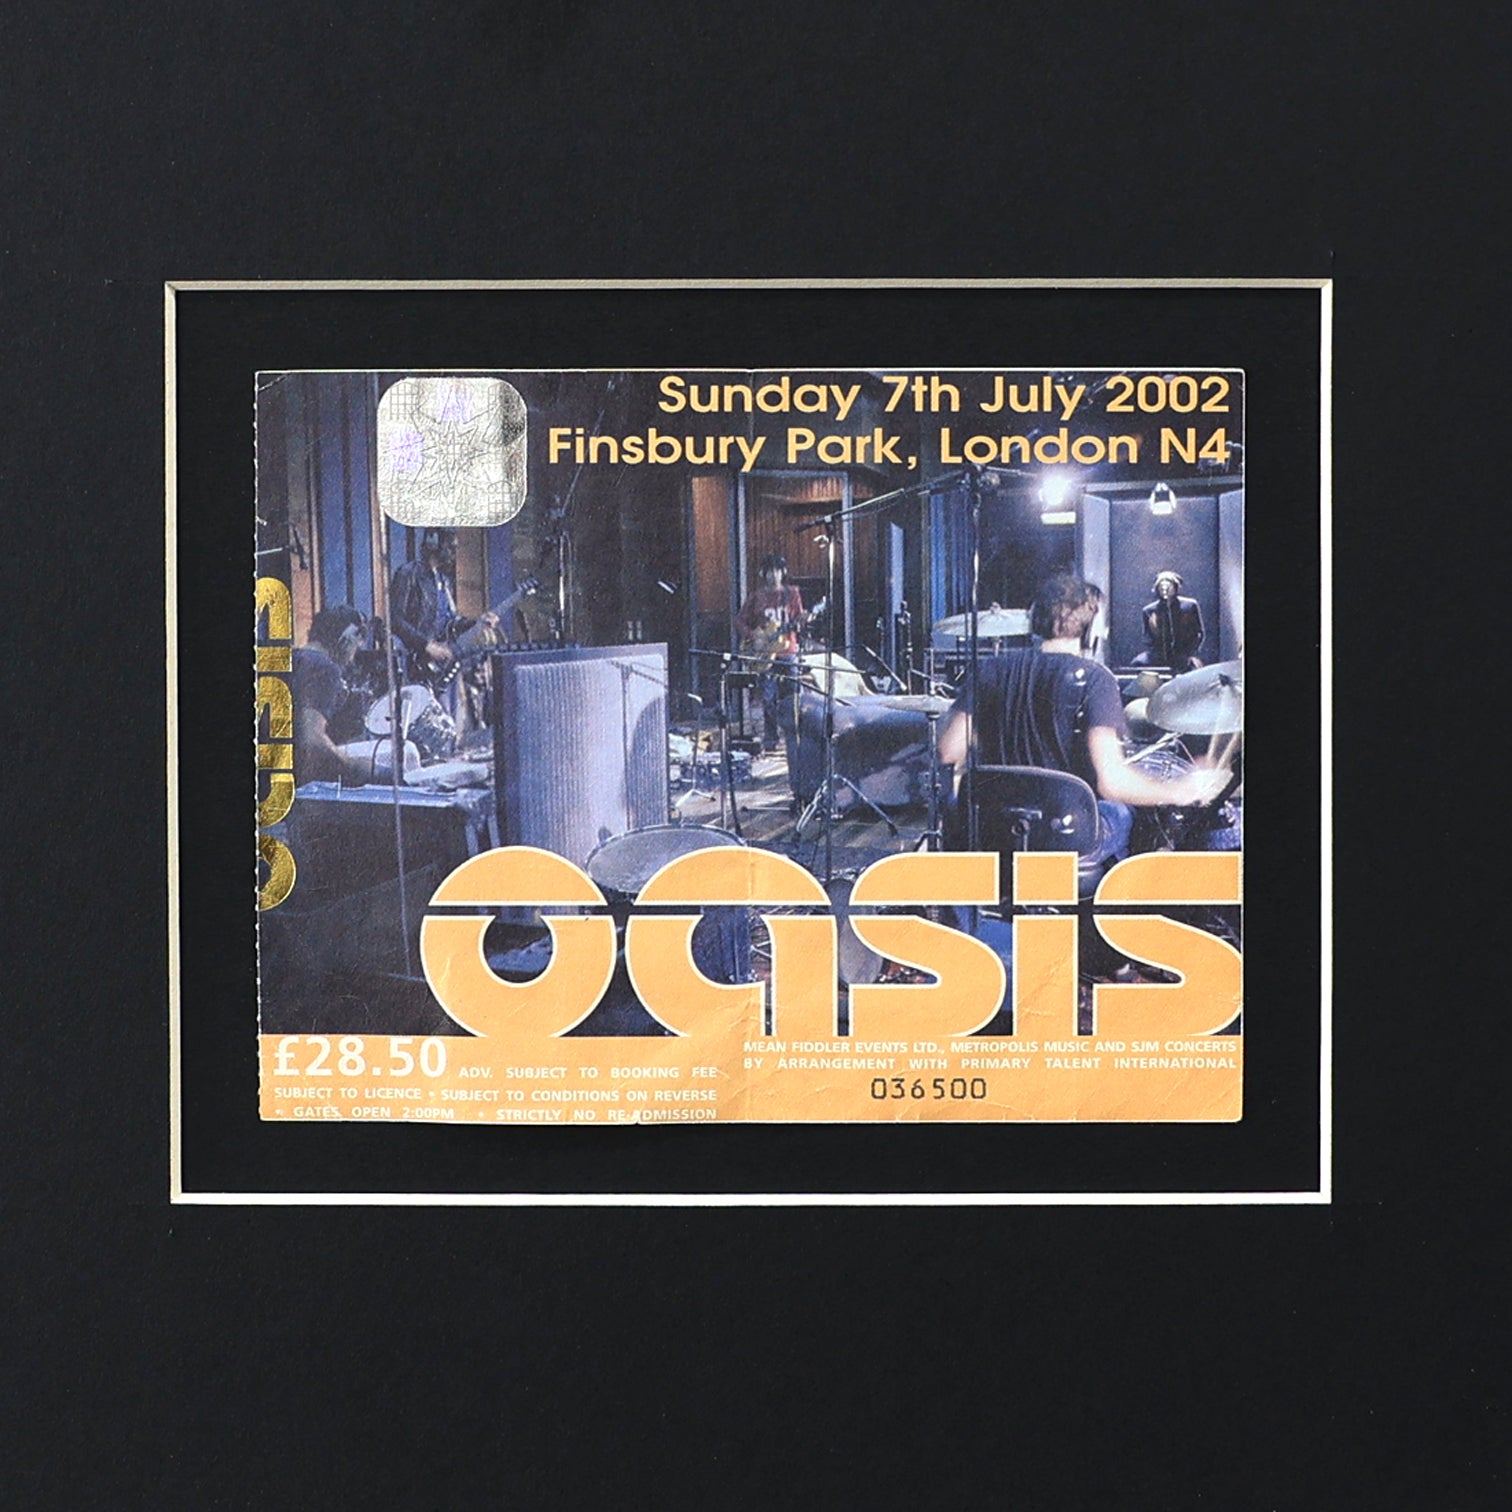 Oasis - Finsbury Park 2002 Ticket - New Item